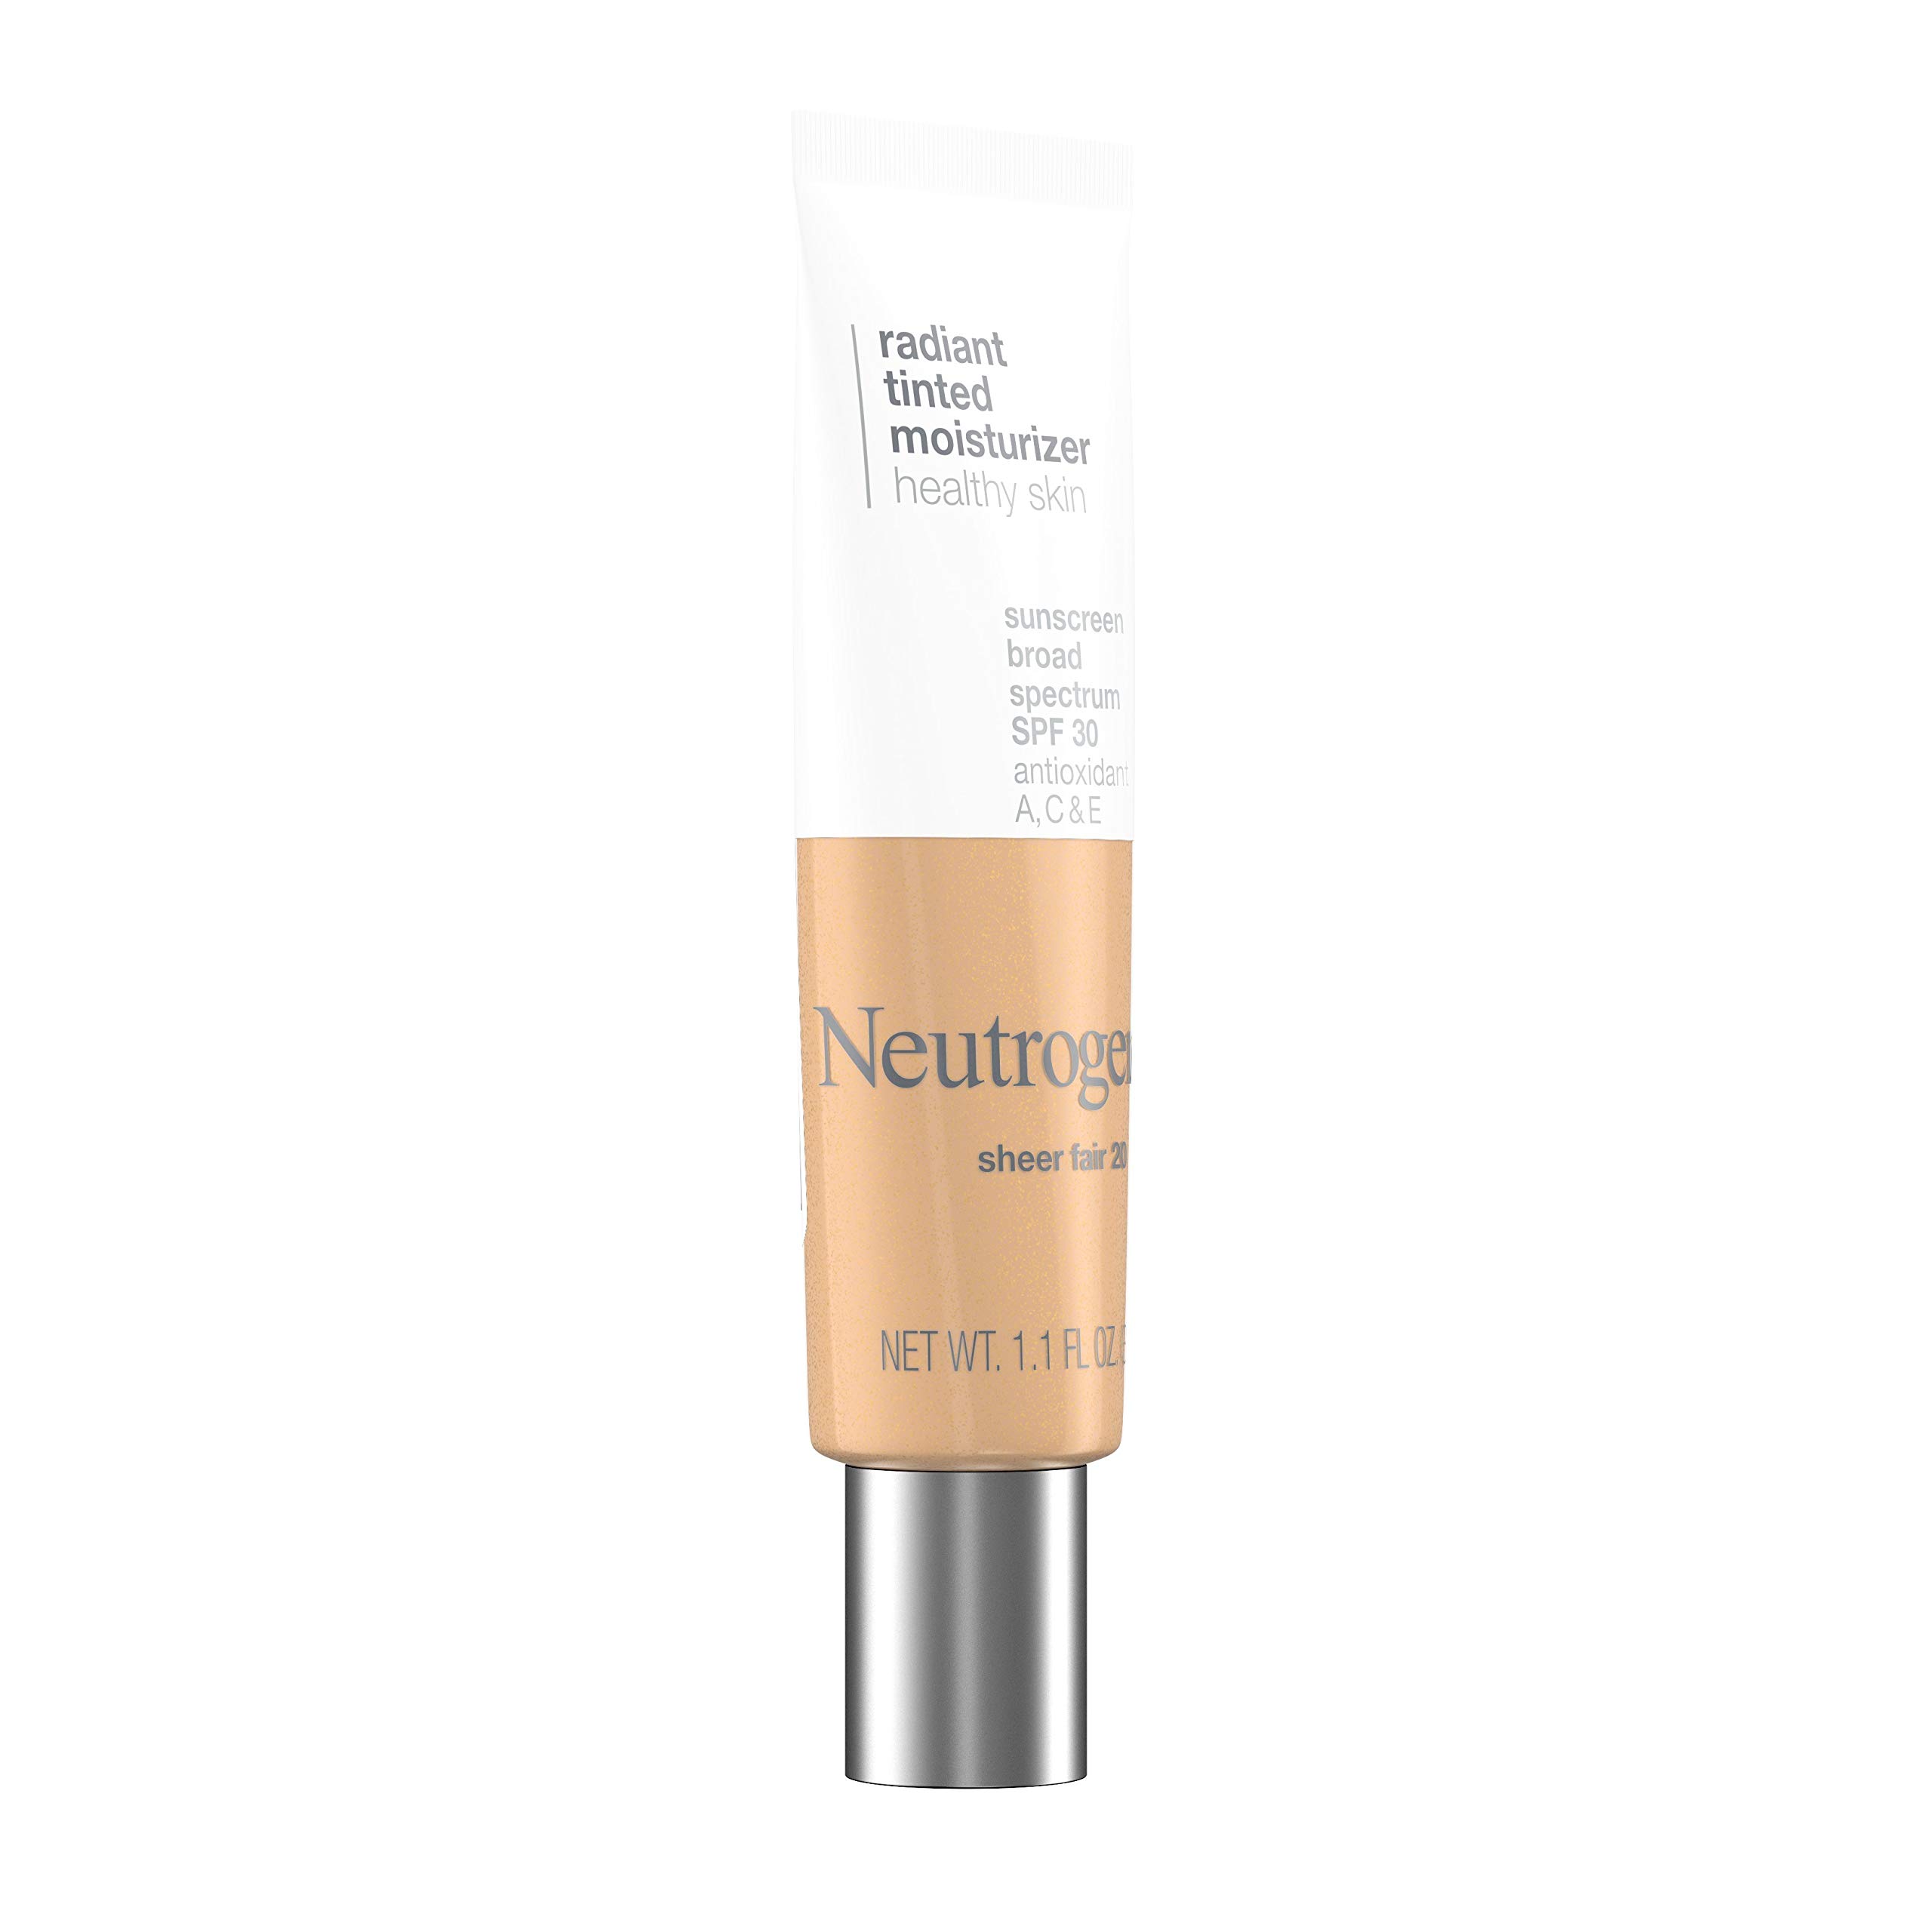 Neutrogena Healthy Skin Radiant Tinted Facial Moisturizer with Broad Spectrum SPF 30 Sunscreen Vitamins A, C, & E, Lightweight, Sheer, & Oil-Free Coverage, Sheer Fair 20, 1.1 fl. oz